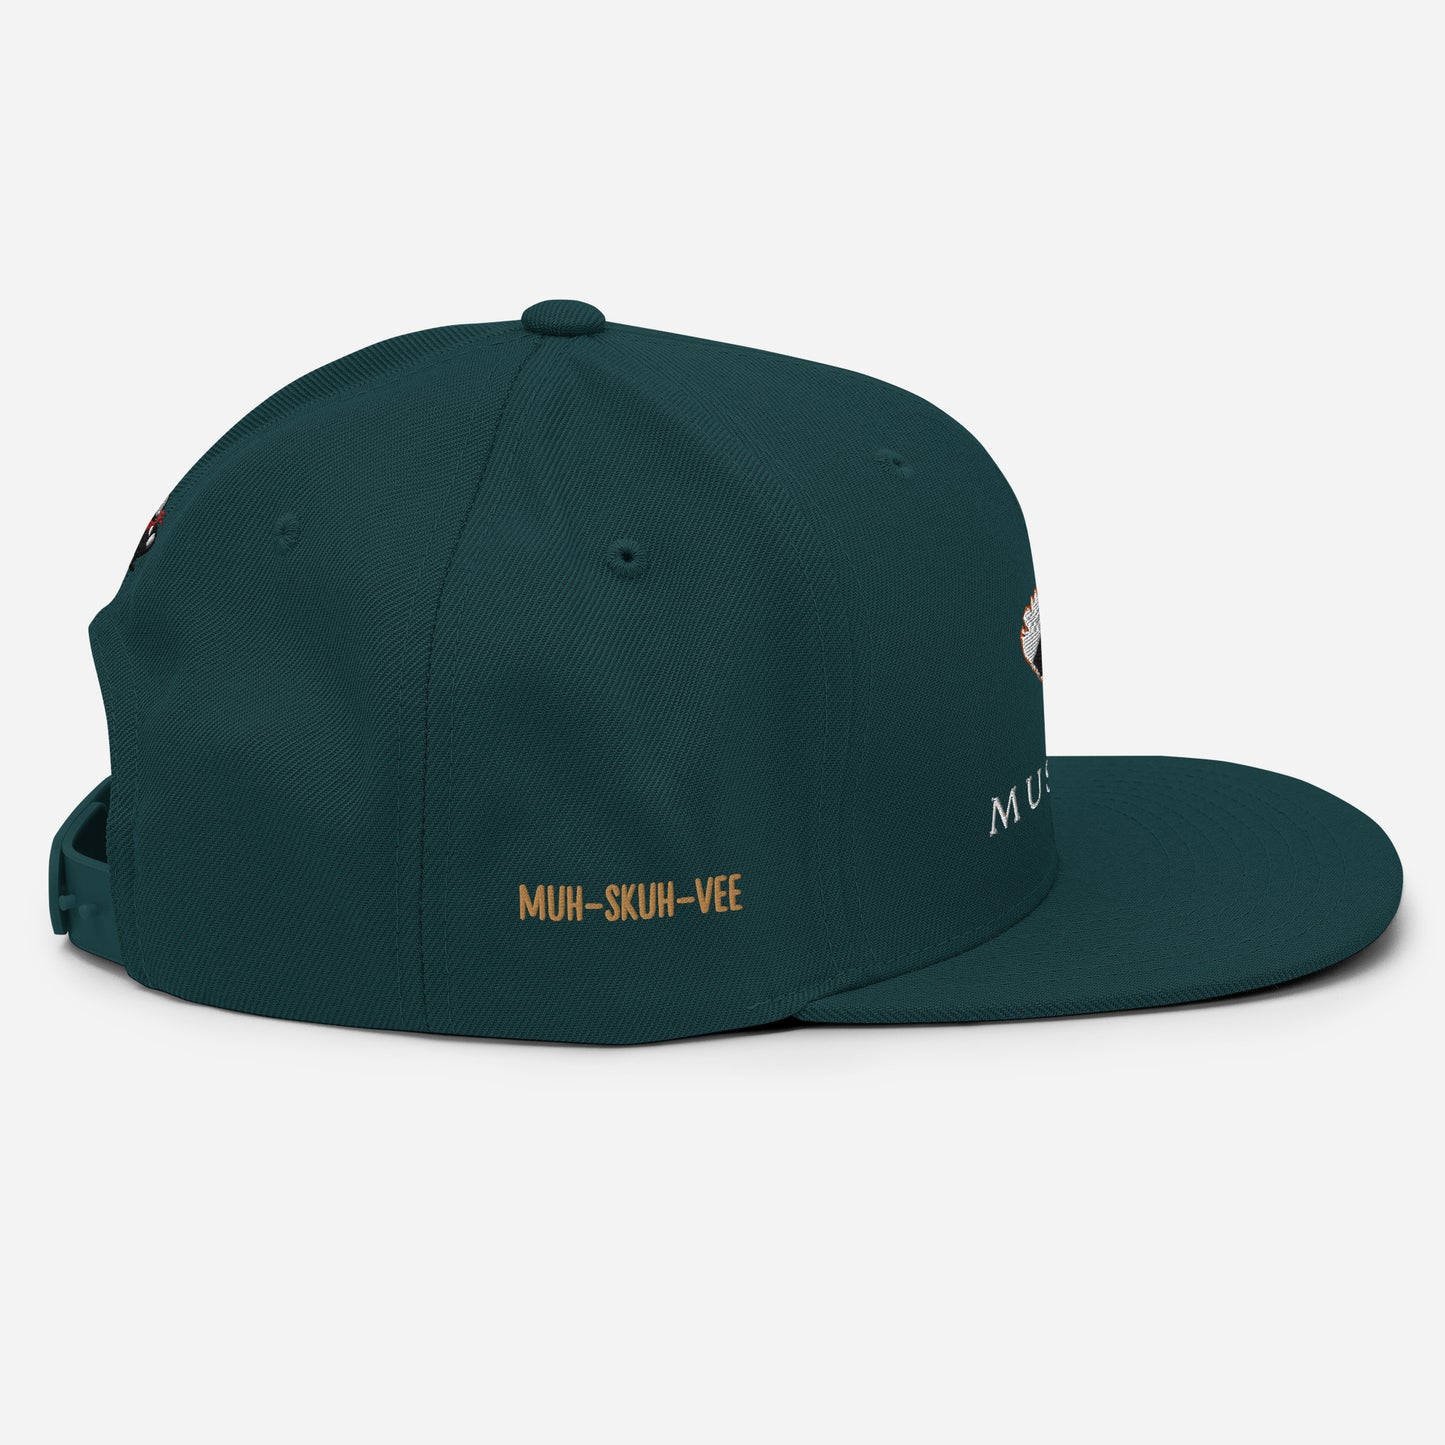 Muscovy Snapback Hat